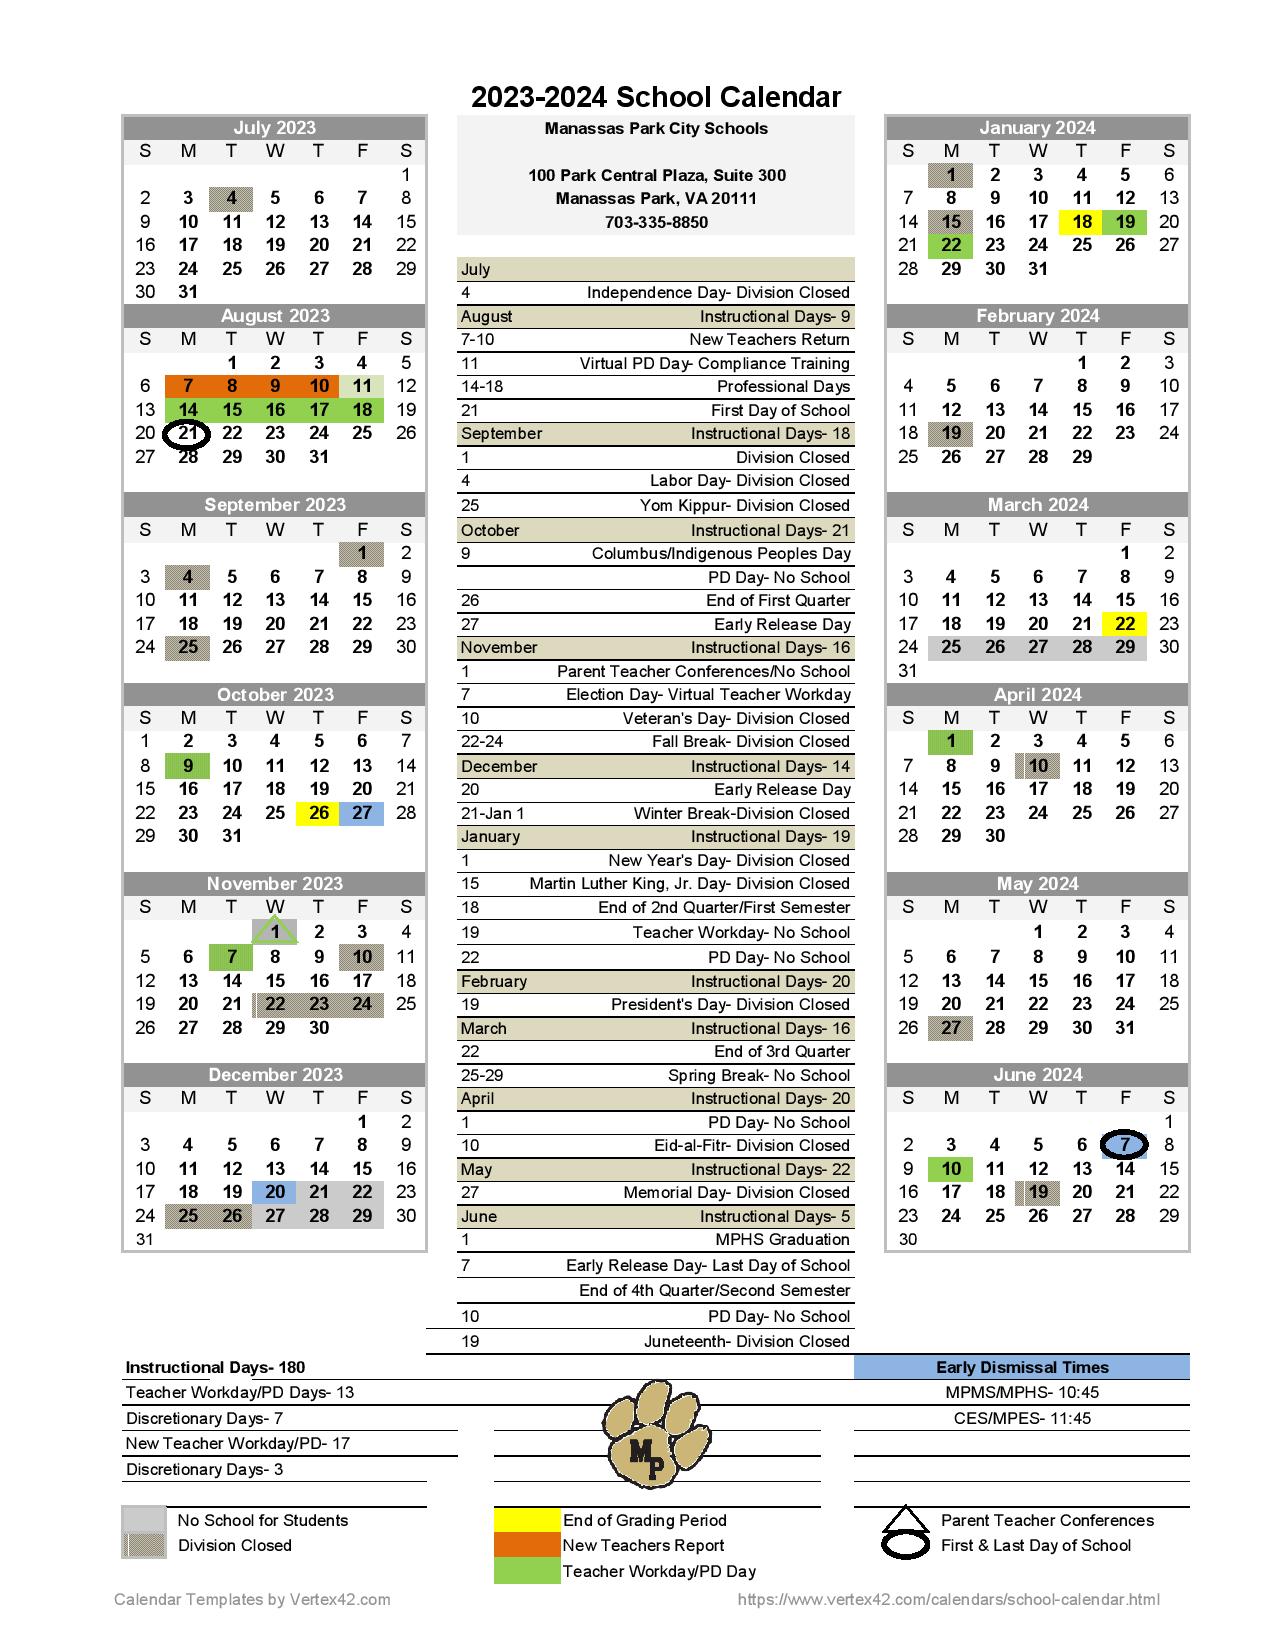 Manassas Park City Schools Calendar 20232024 in PDF